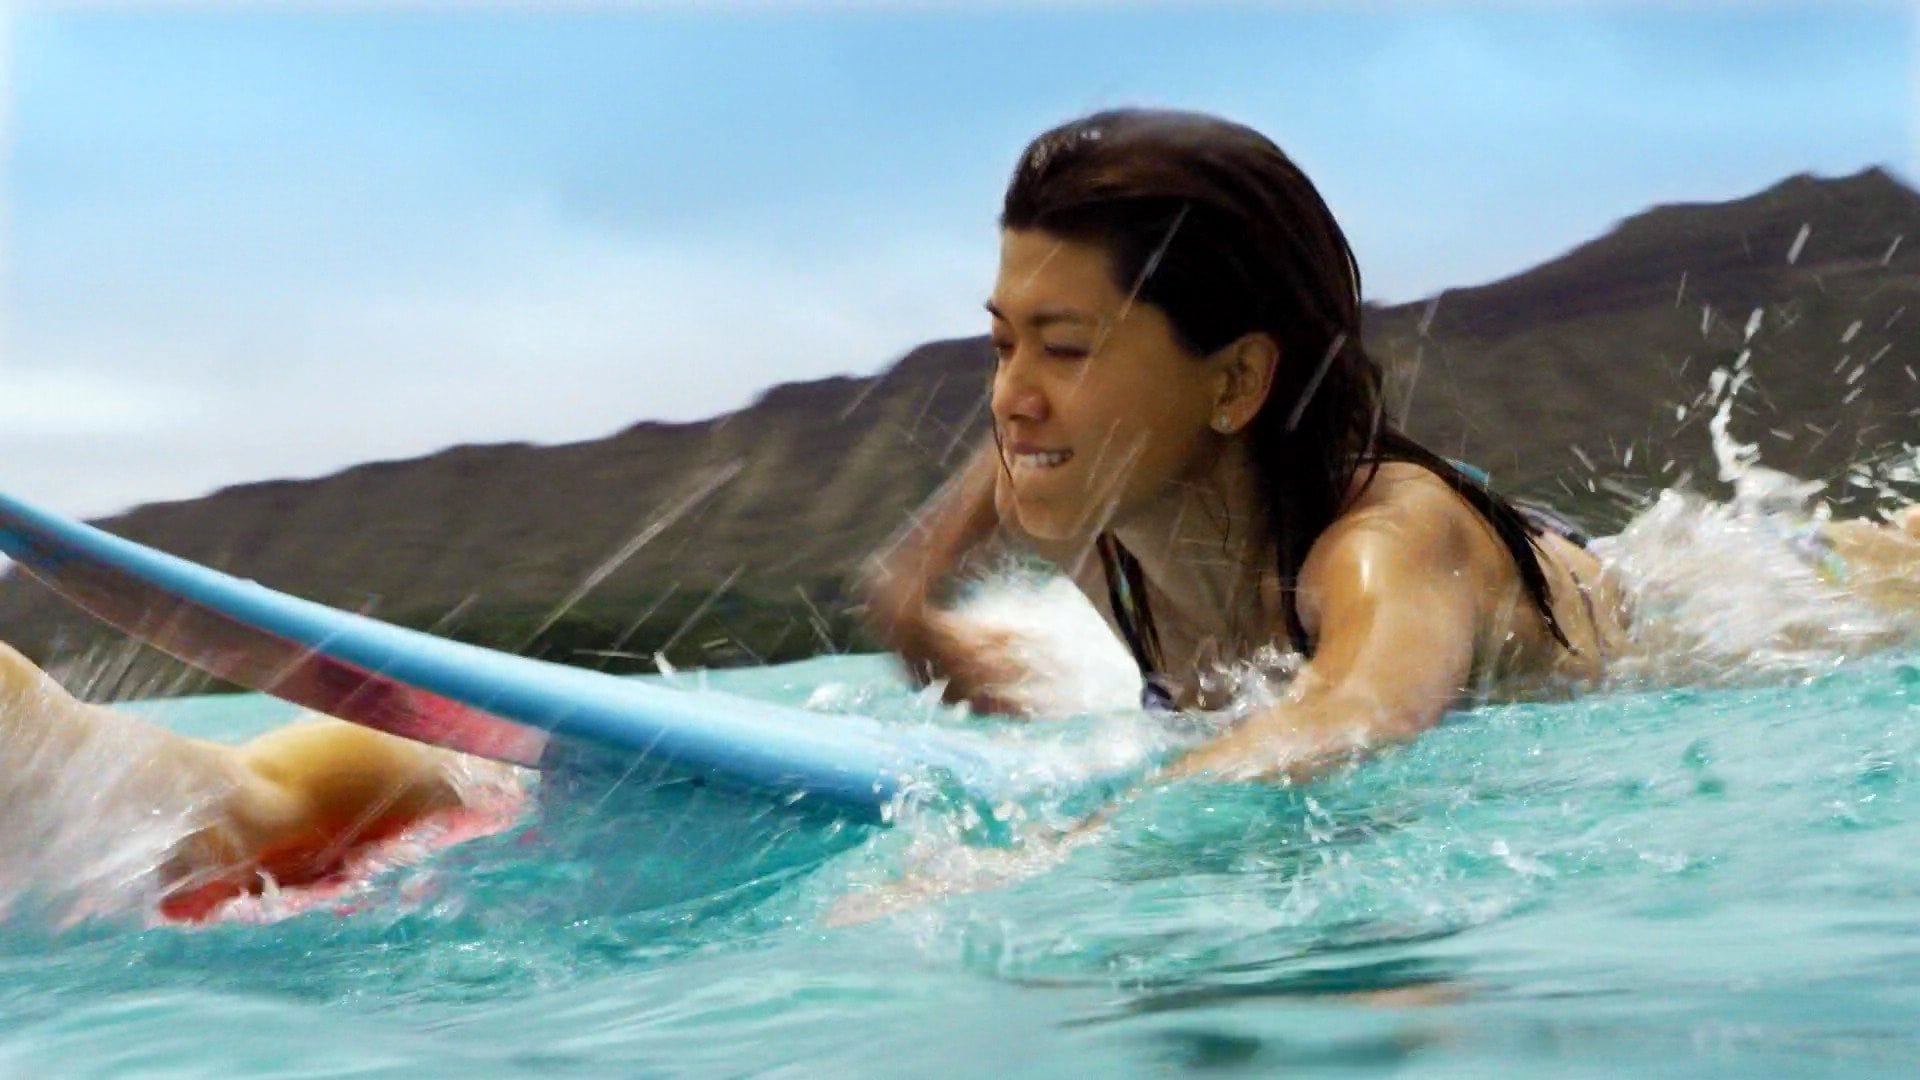 Hawaii Five-0 Season 5 Episode 3